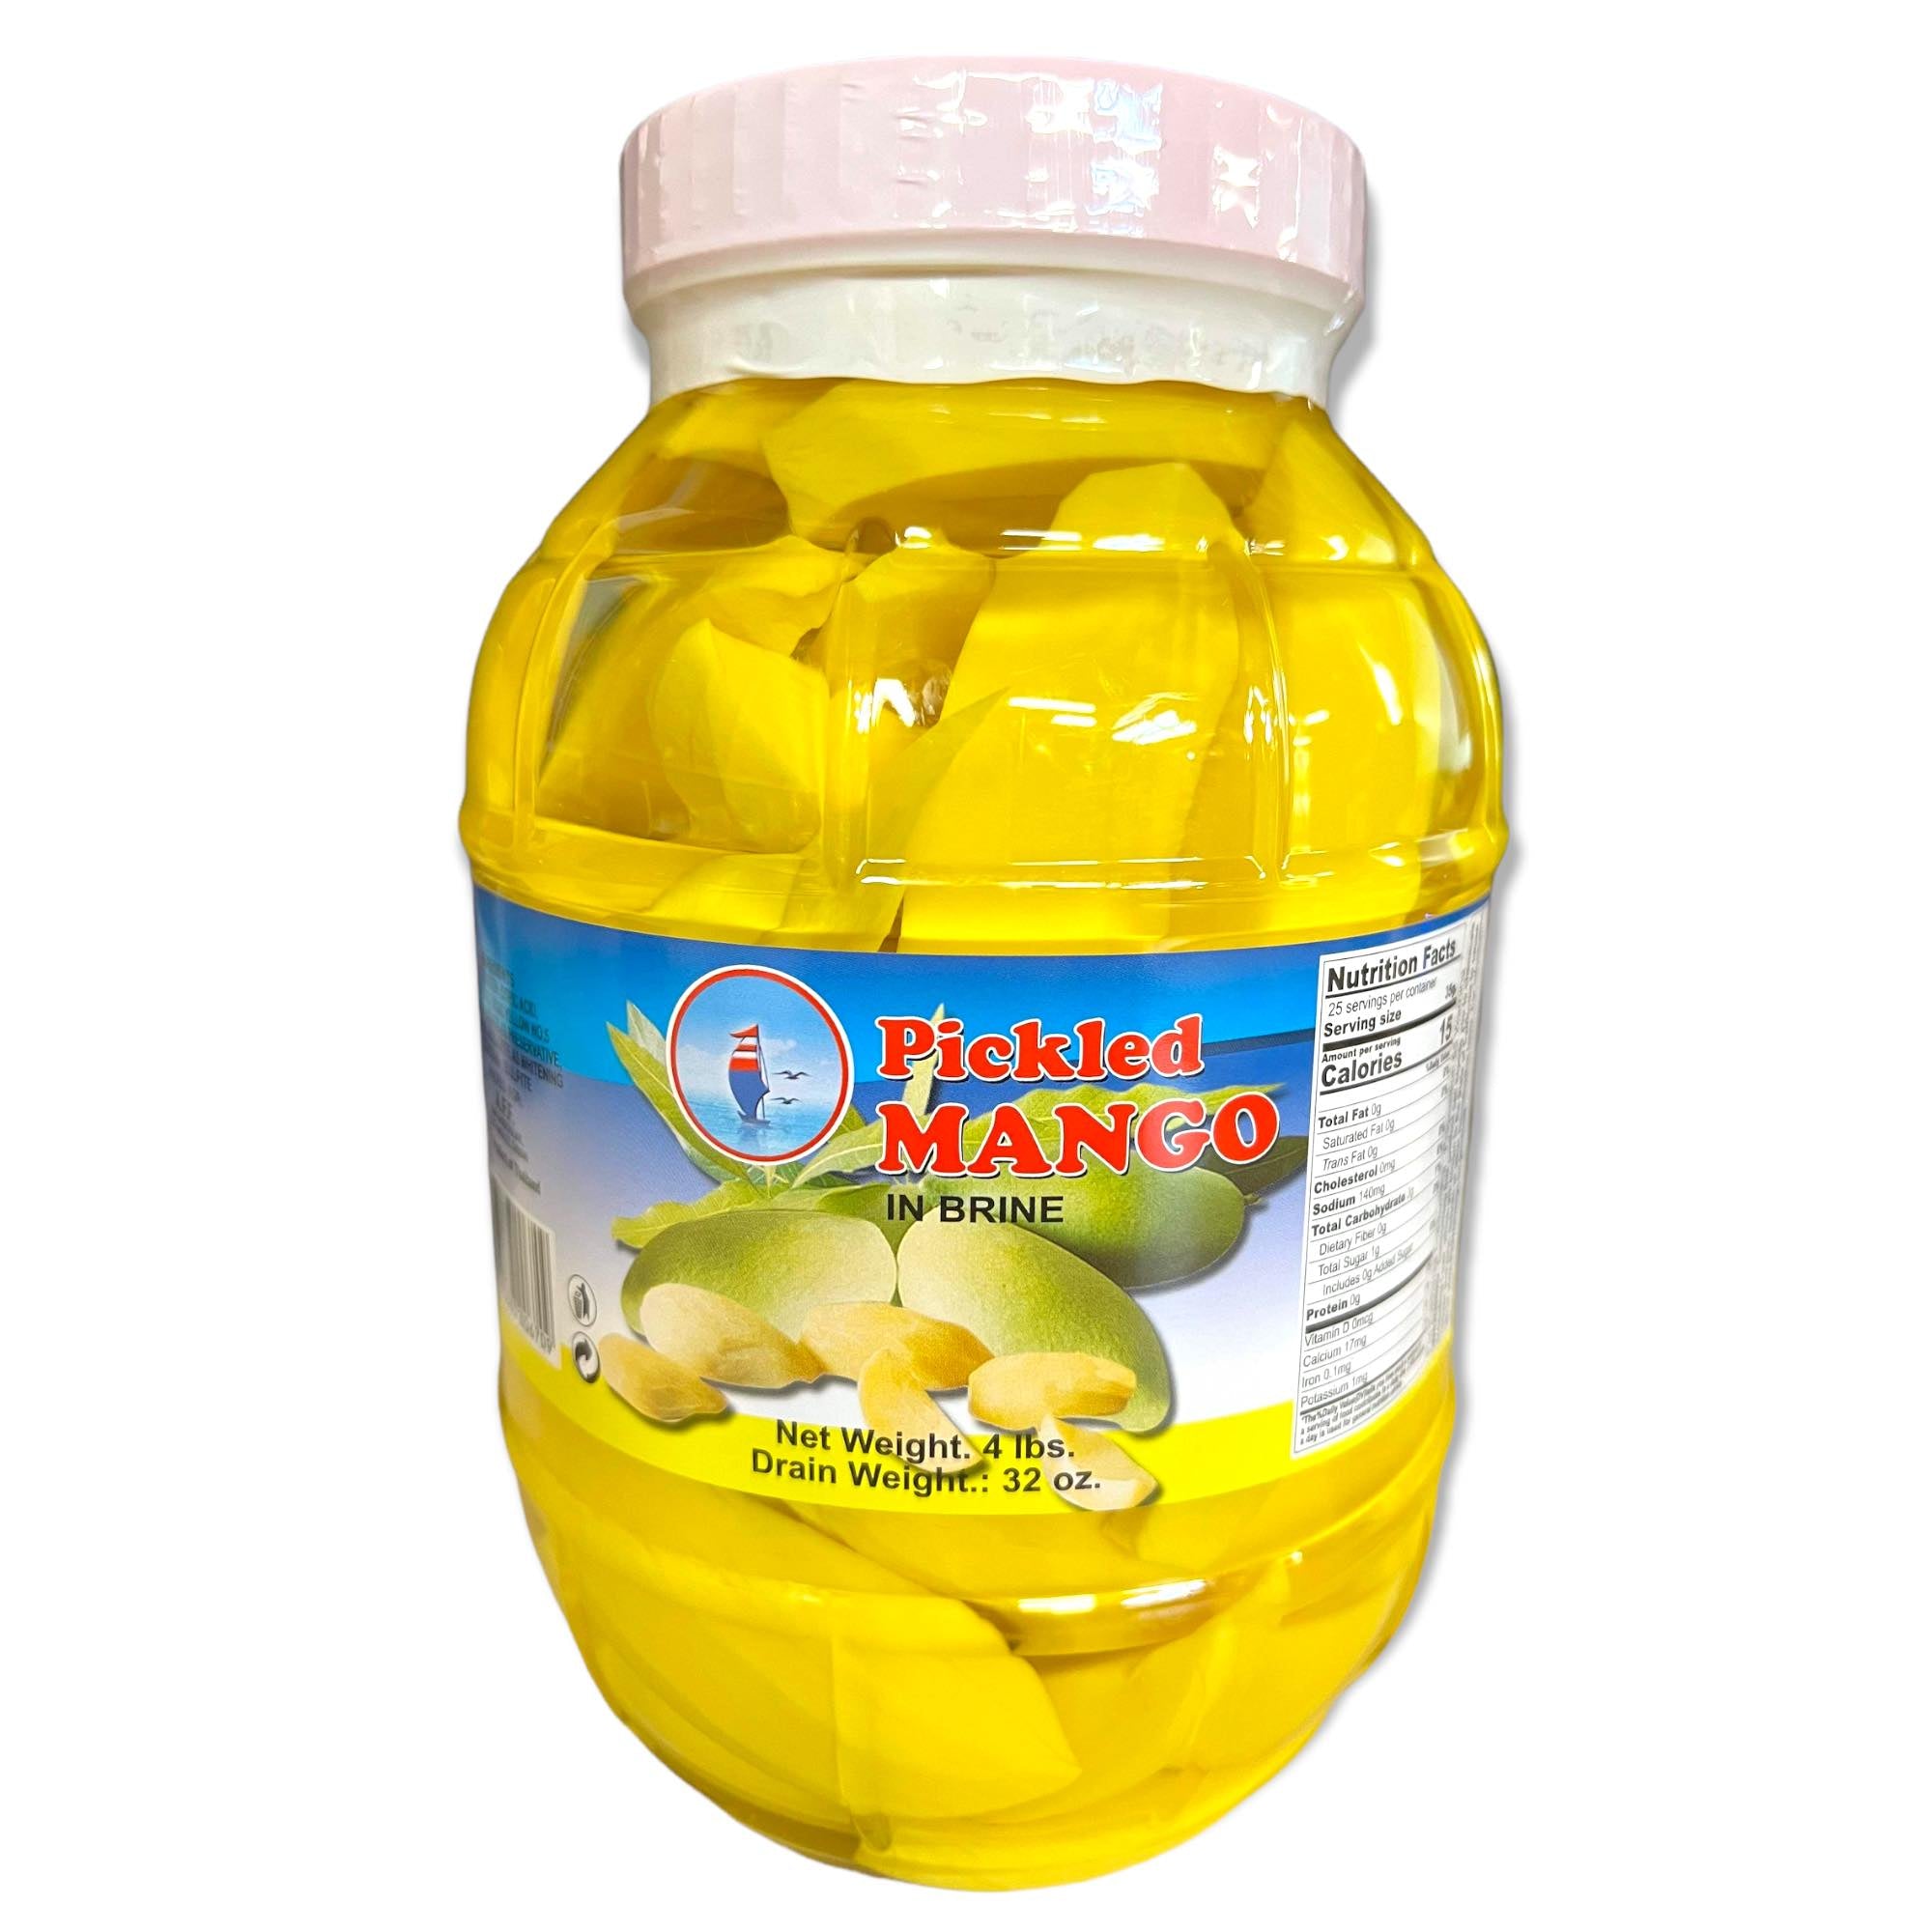 TL Pickled Mango in Brine - 32 OZ - 4 LBS